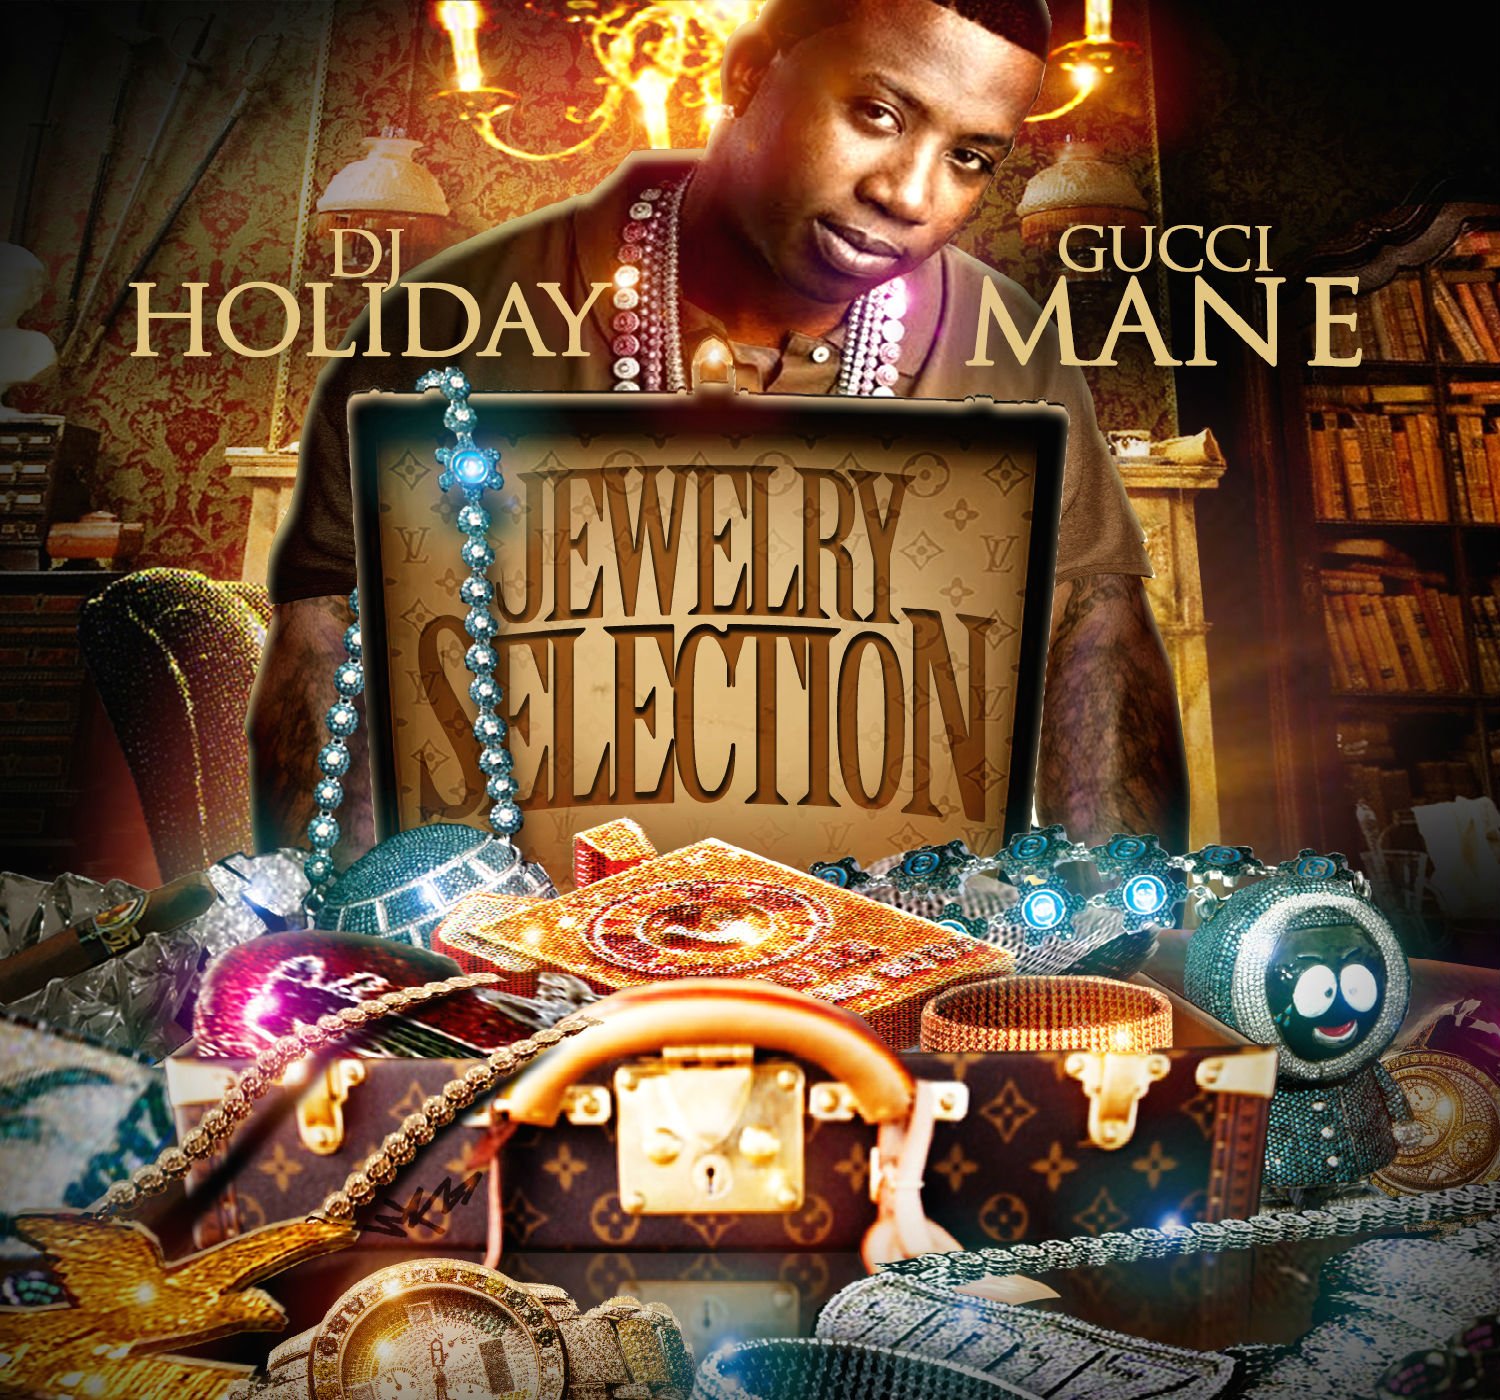 Gucci Mane Southern Gangsta Rap Rapper Hip Hop Holiday Poster